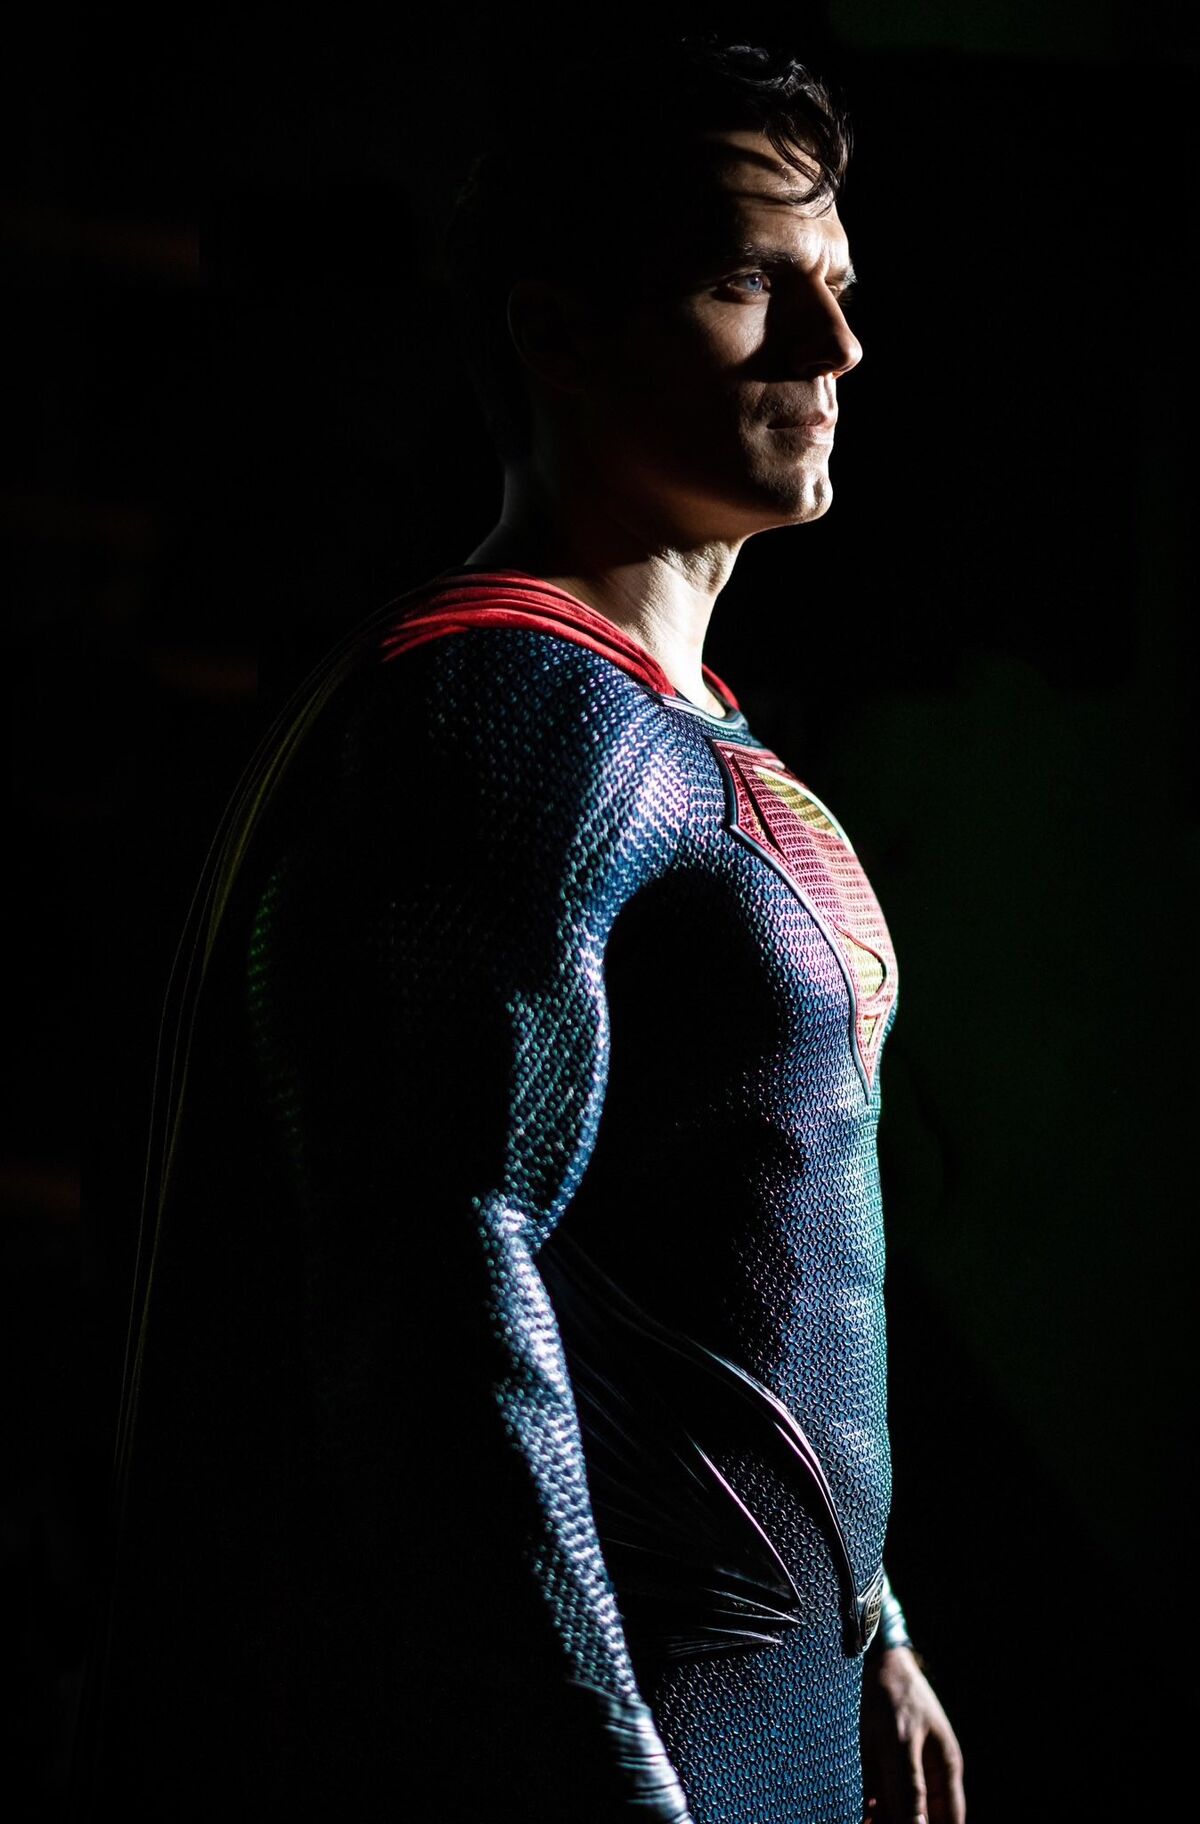 Man of Steel (film), Superman Wiki